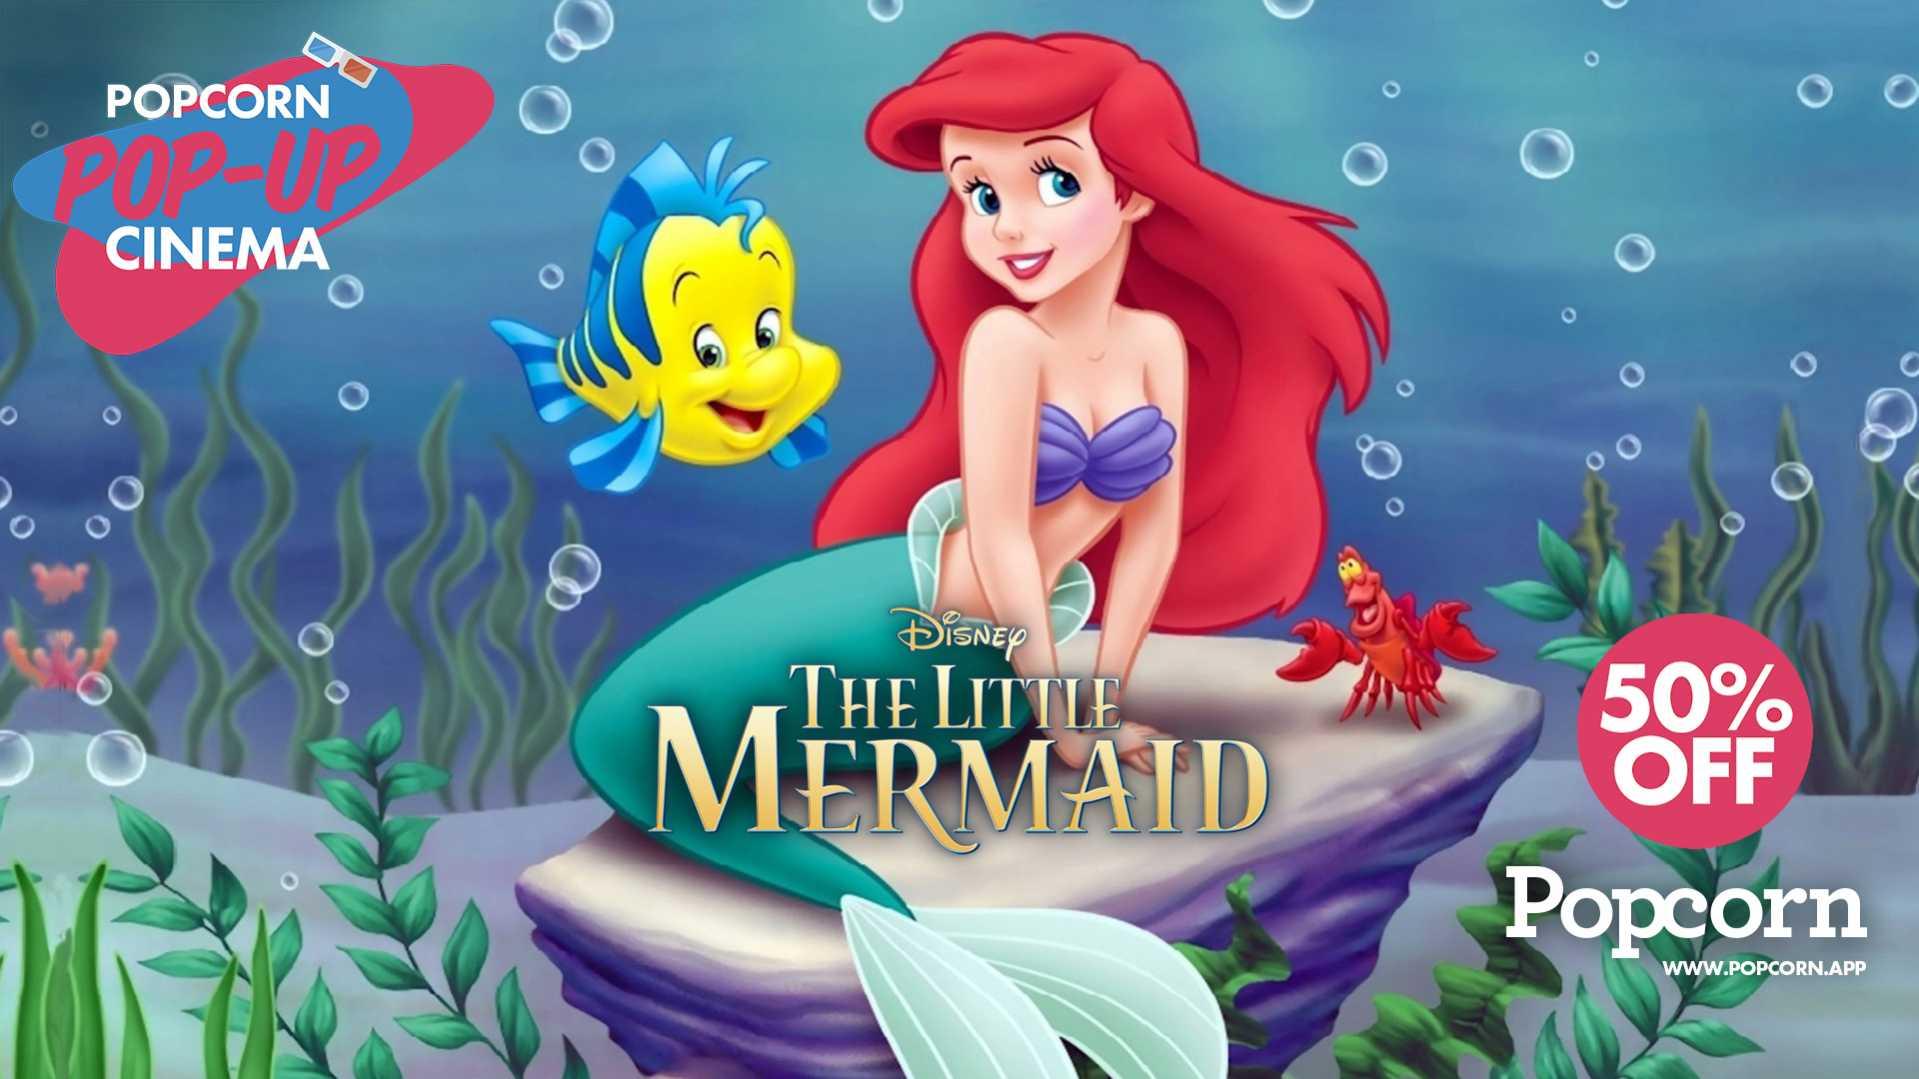 The Little Mermaid Pop-Up Cinema by Popcorn App